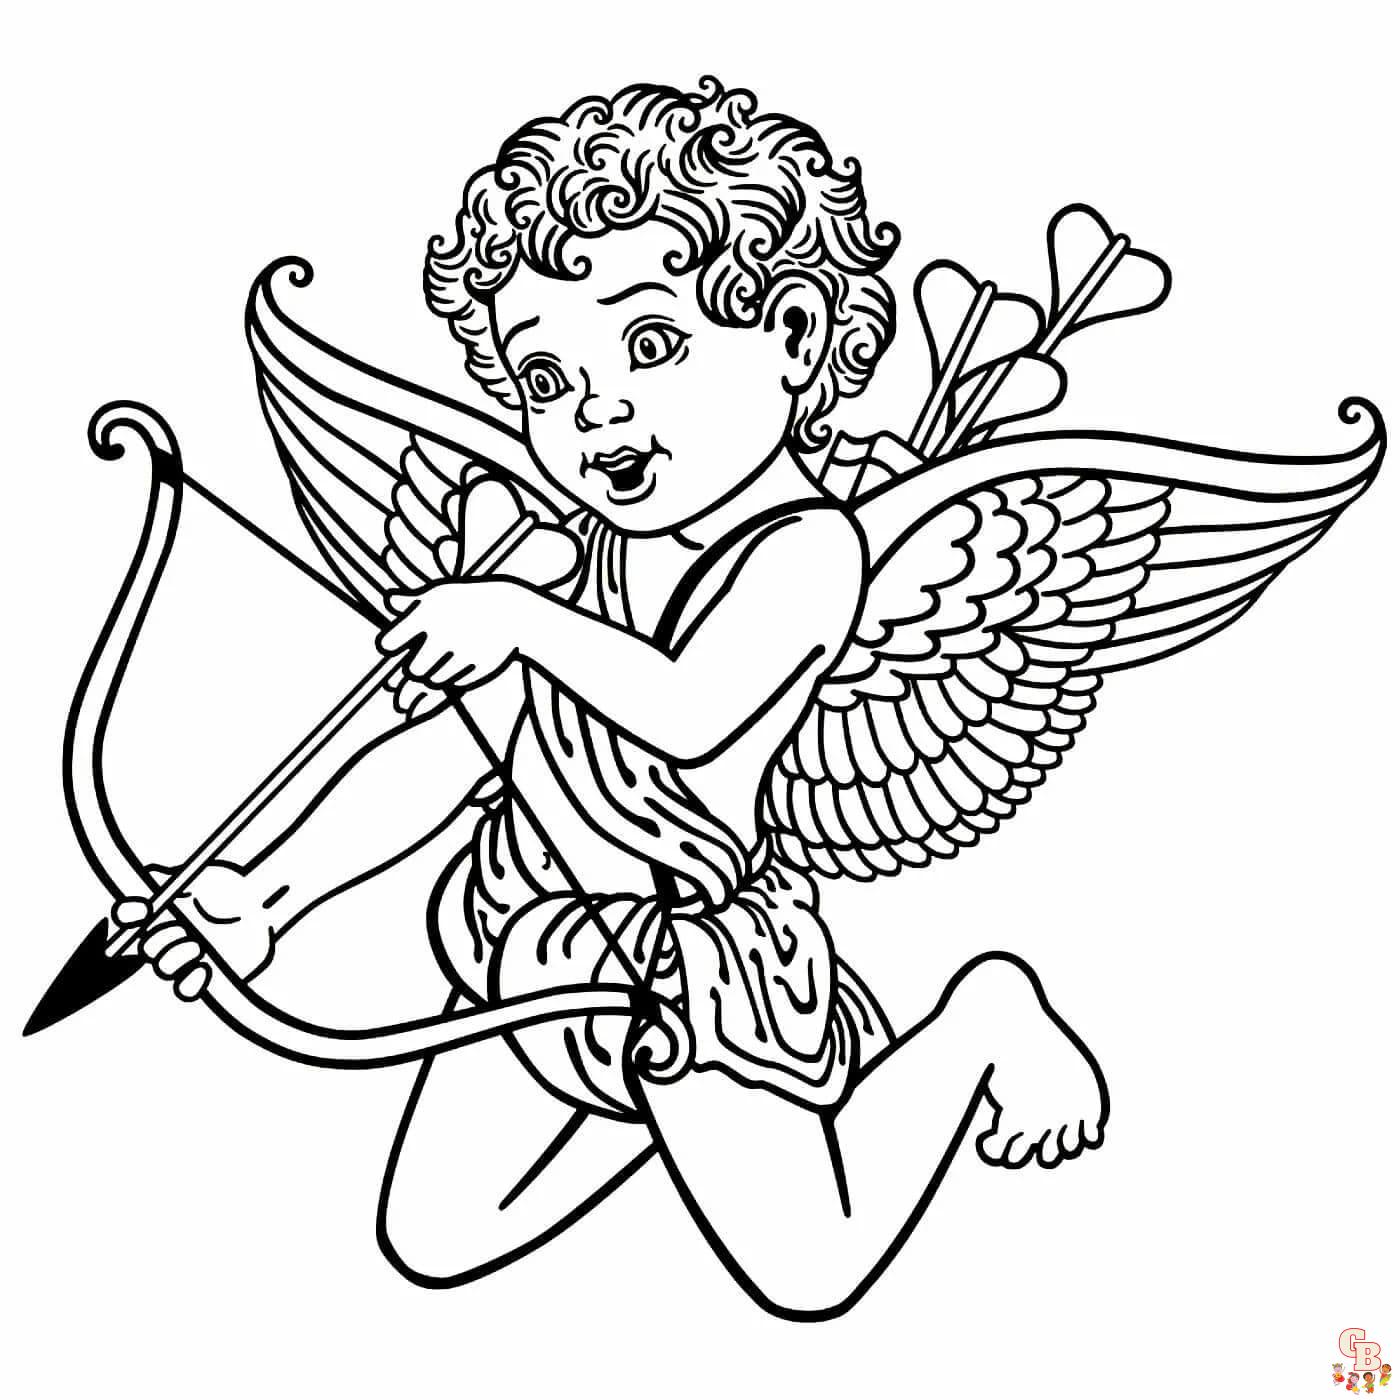 Coloriage Cupidon